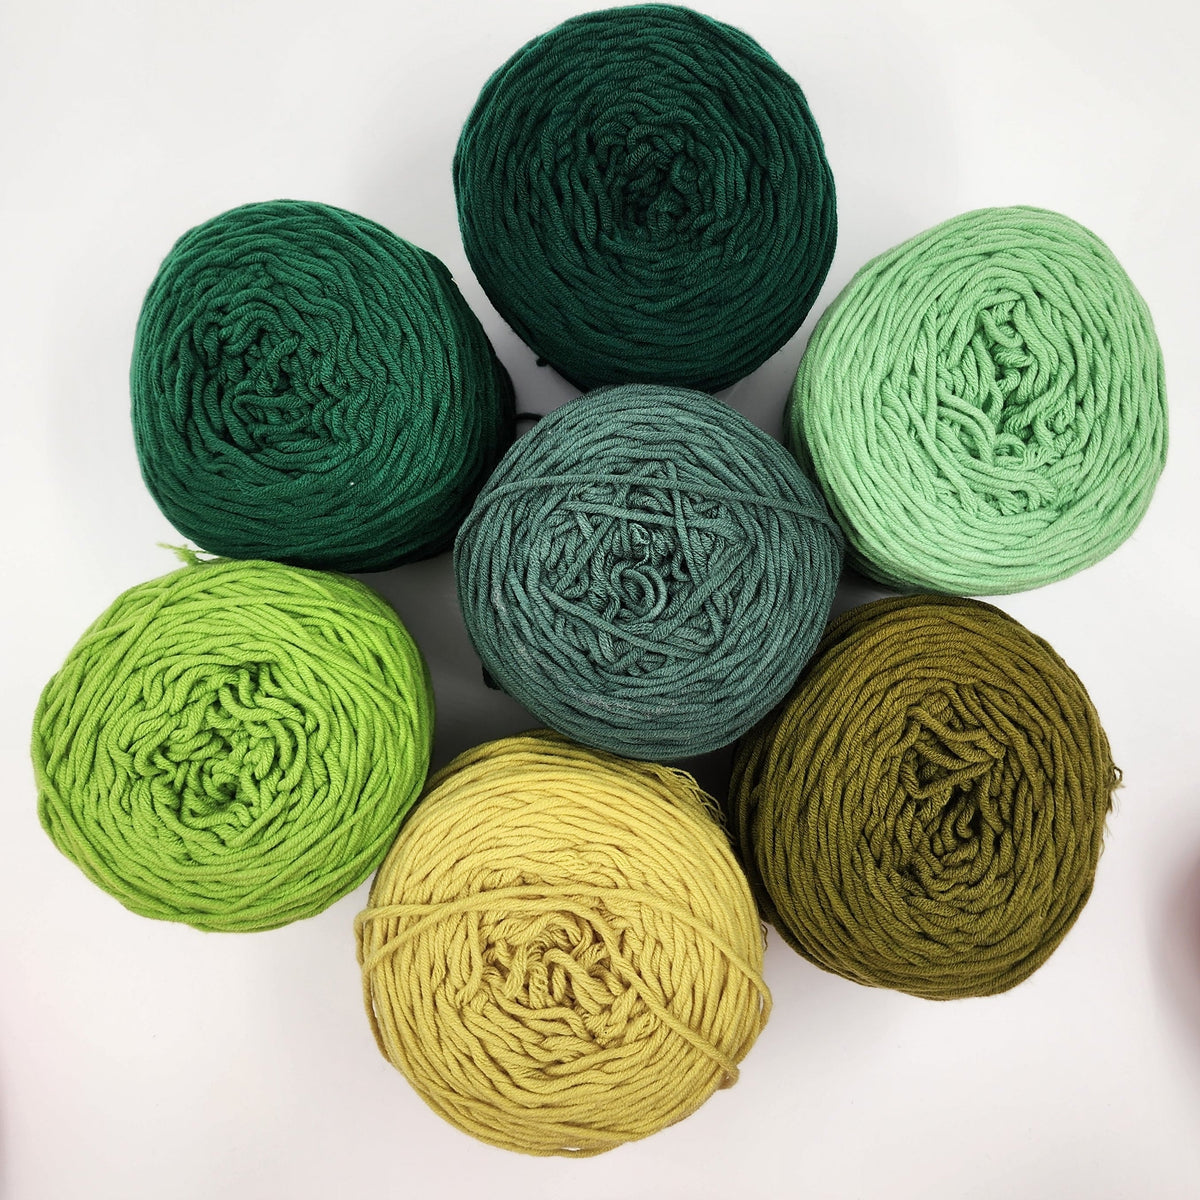 EFFY Chunky Cotton Acrylic Yarn Bundles! Inspiration awaits! - All